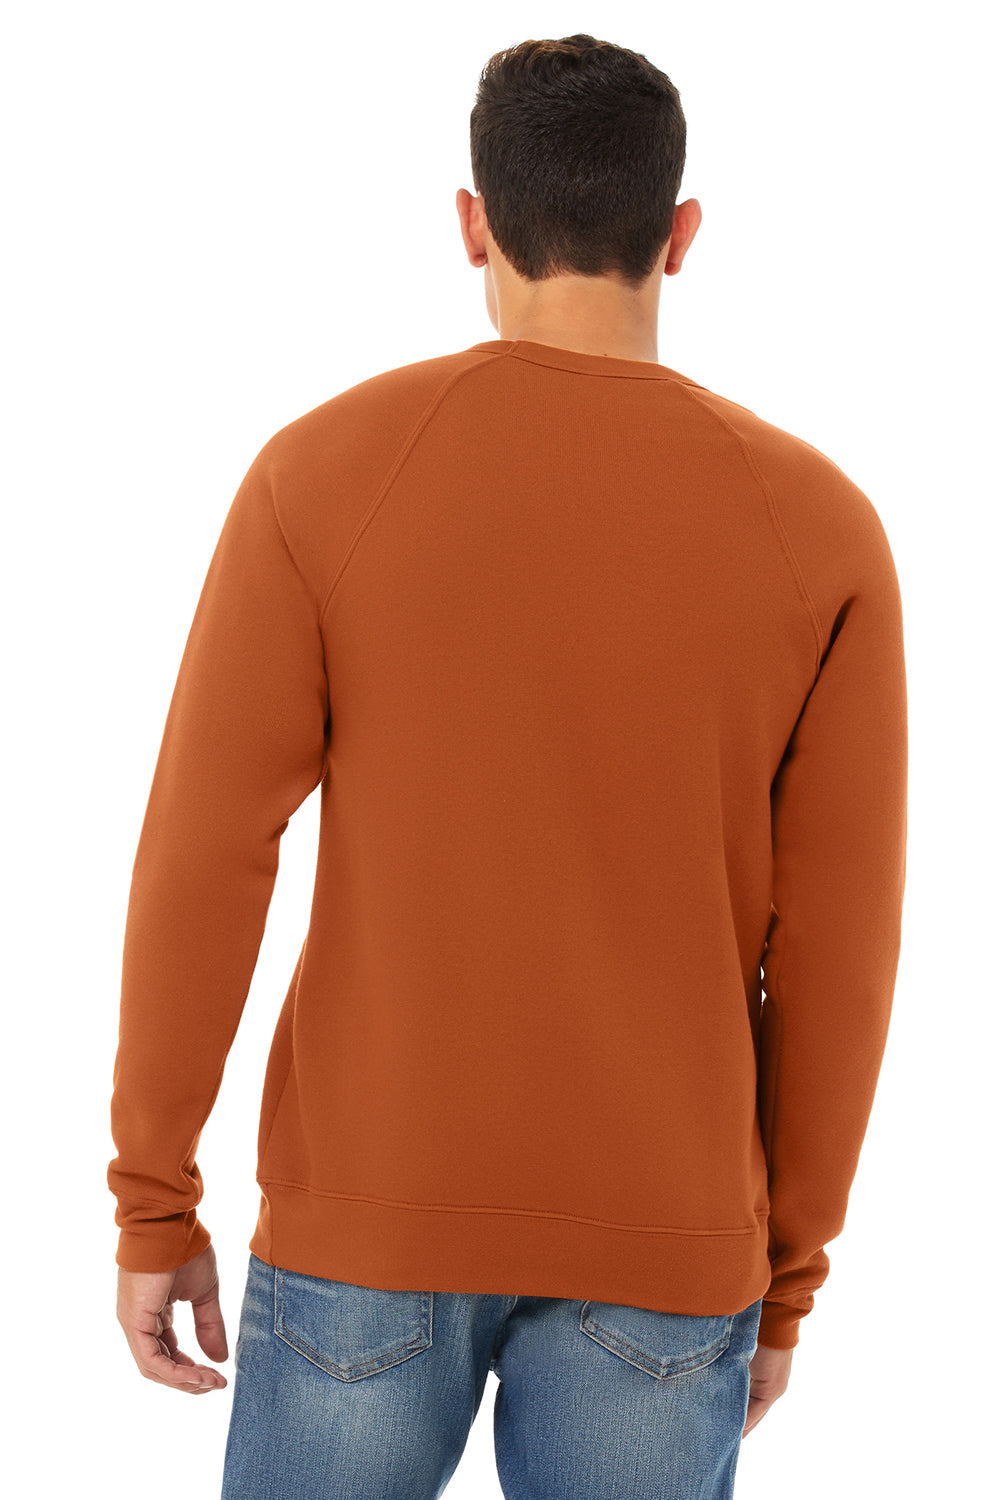 Bella + Canvas BC3901/3901 Mens Sponge Fleece Crewneck Sweatshirt Autumn Orange Model Back